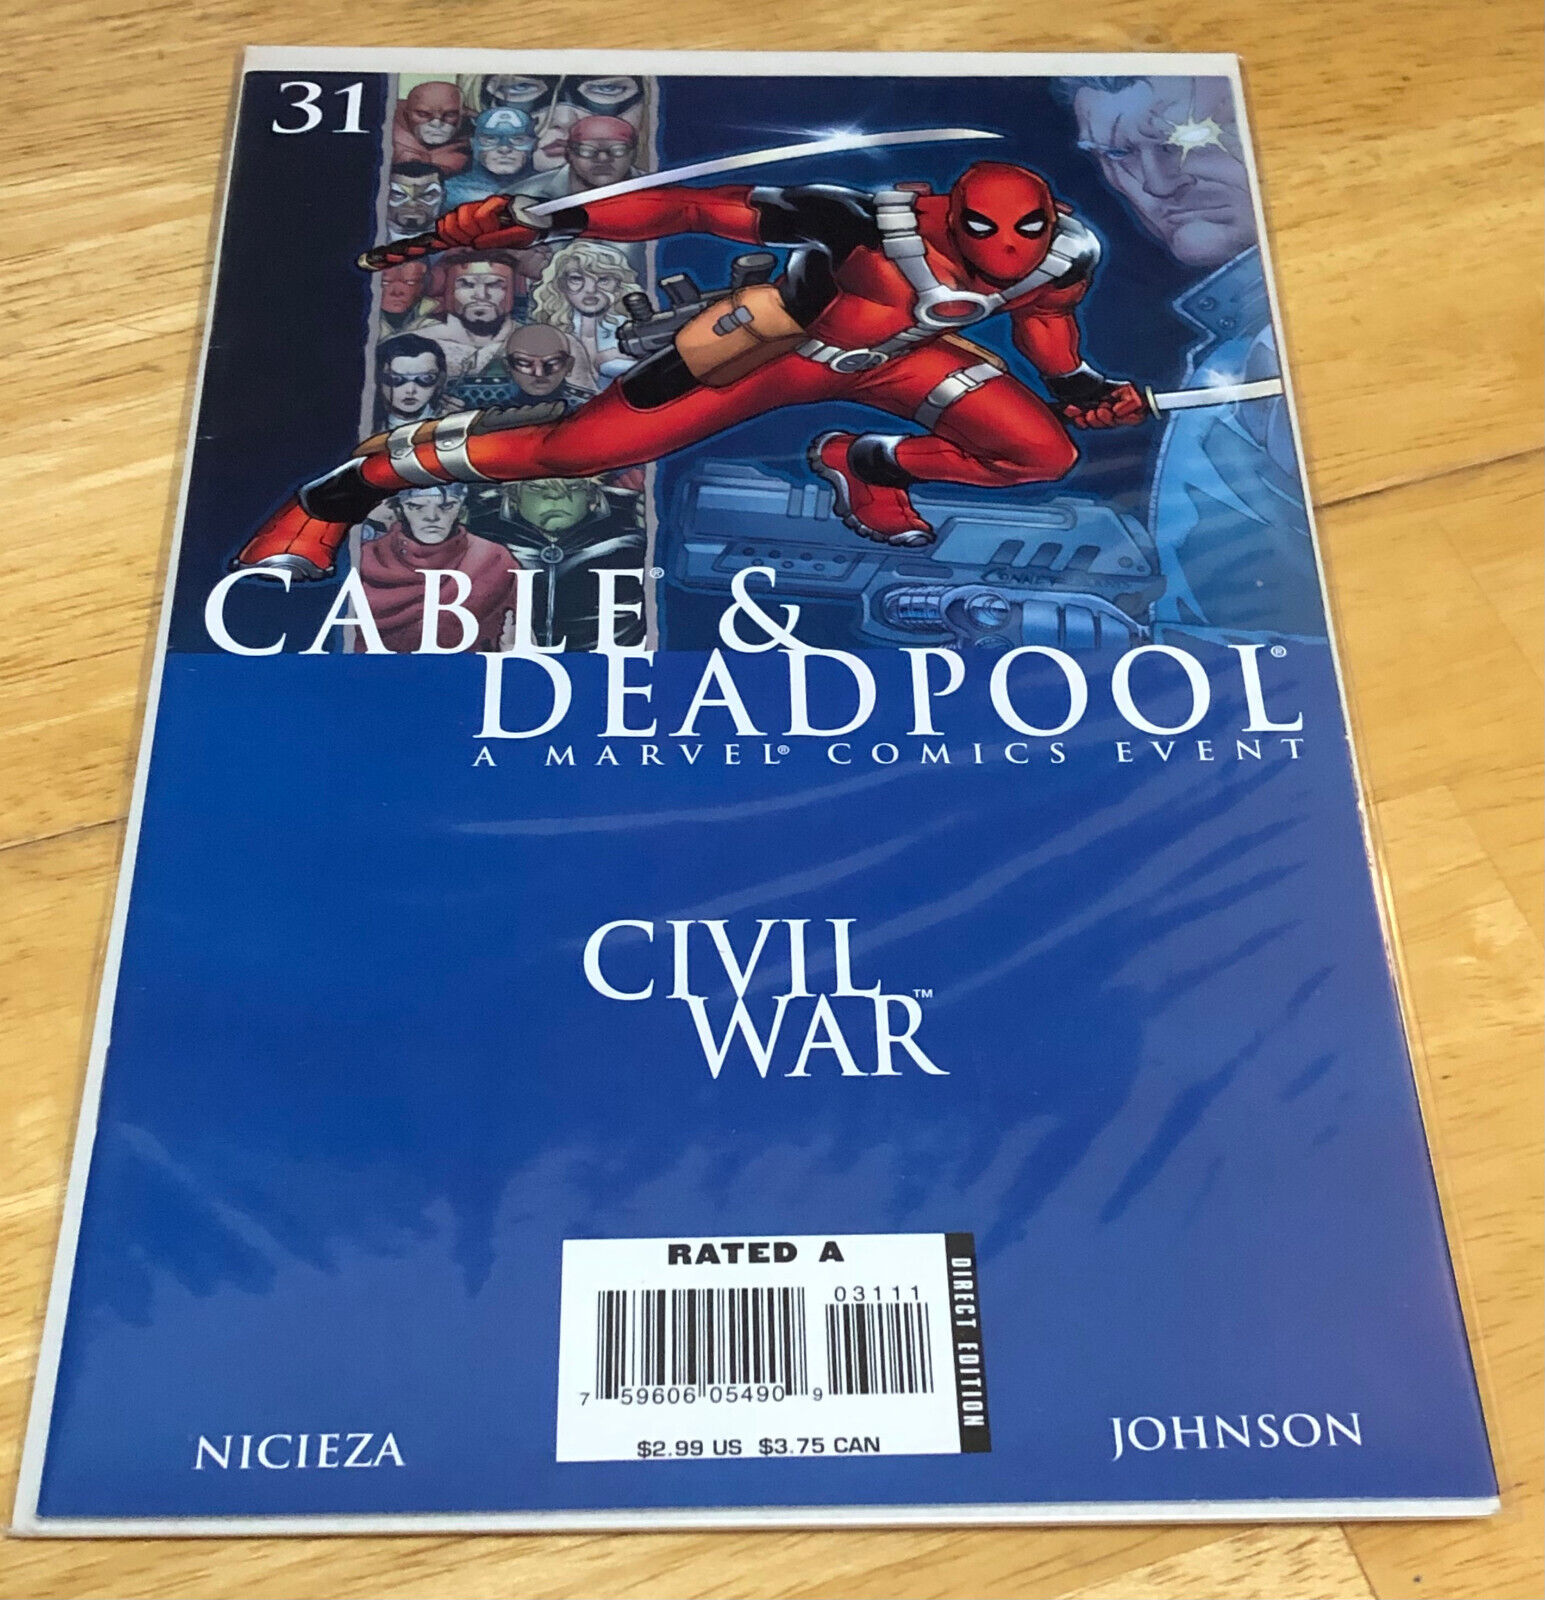 Deadpool & Cable #31 Civil War Marvel Comic Book 